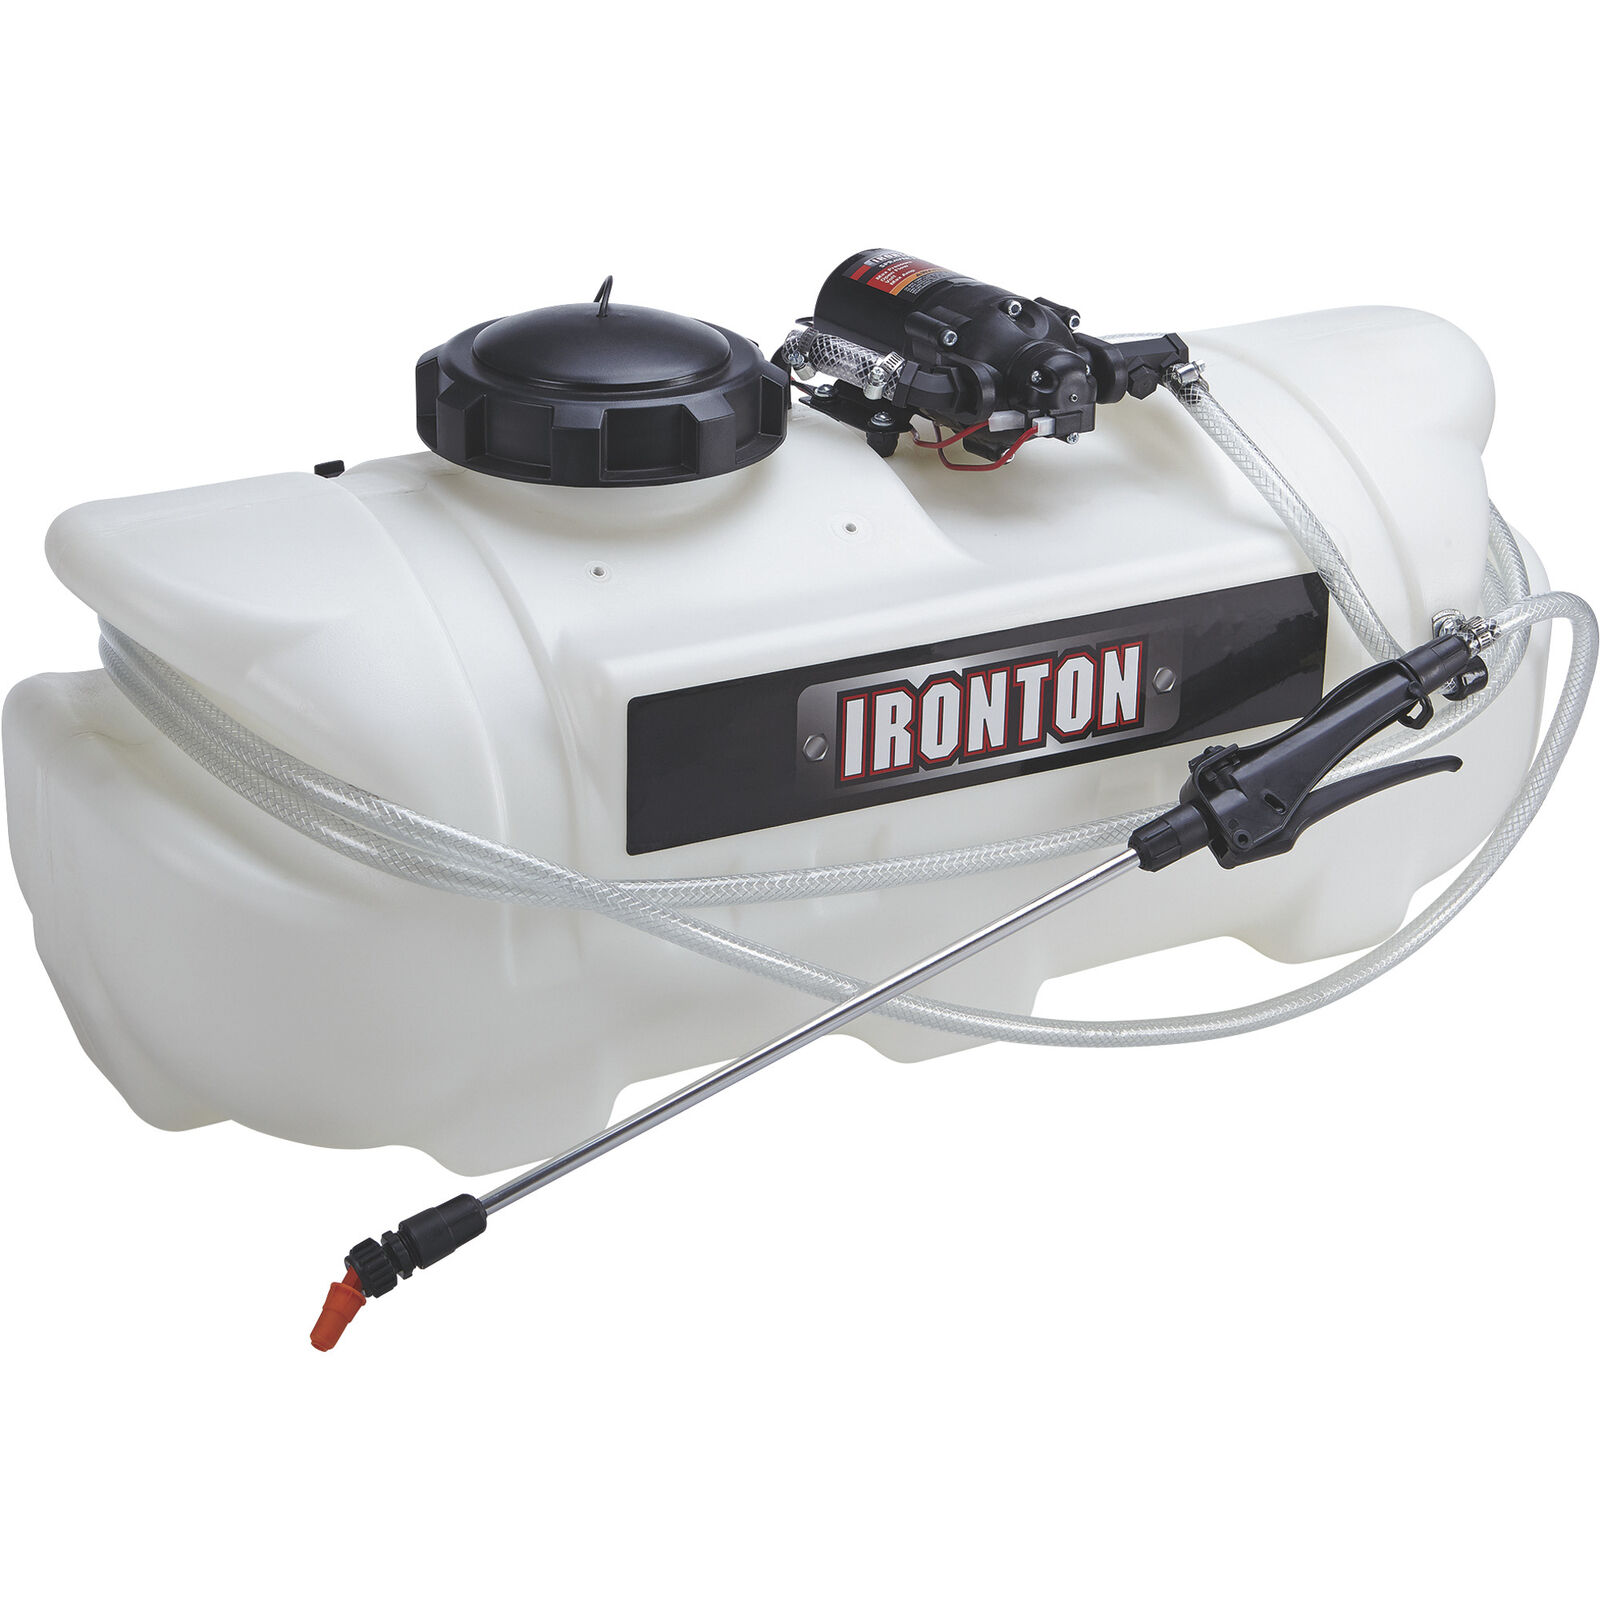 Ironton Atv Spot Sprayer - 16-gallon Capacity, 2.1 Gpm, 12 Volt